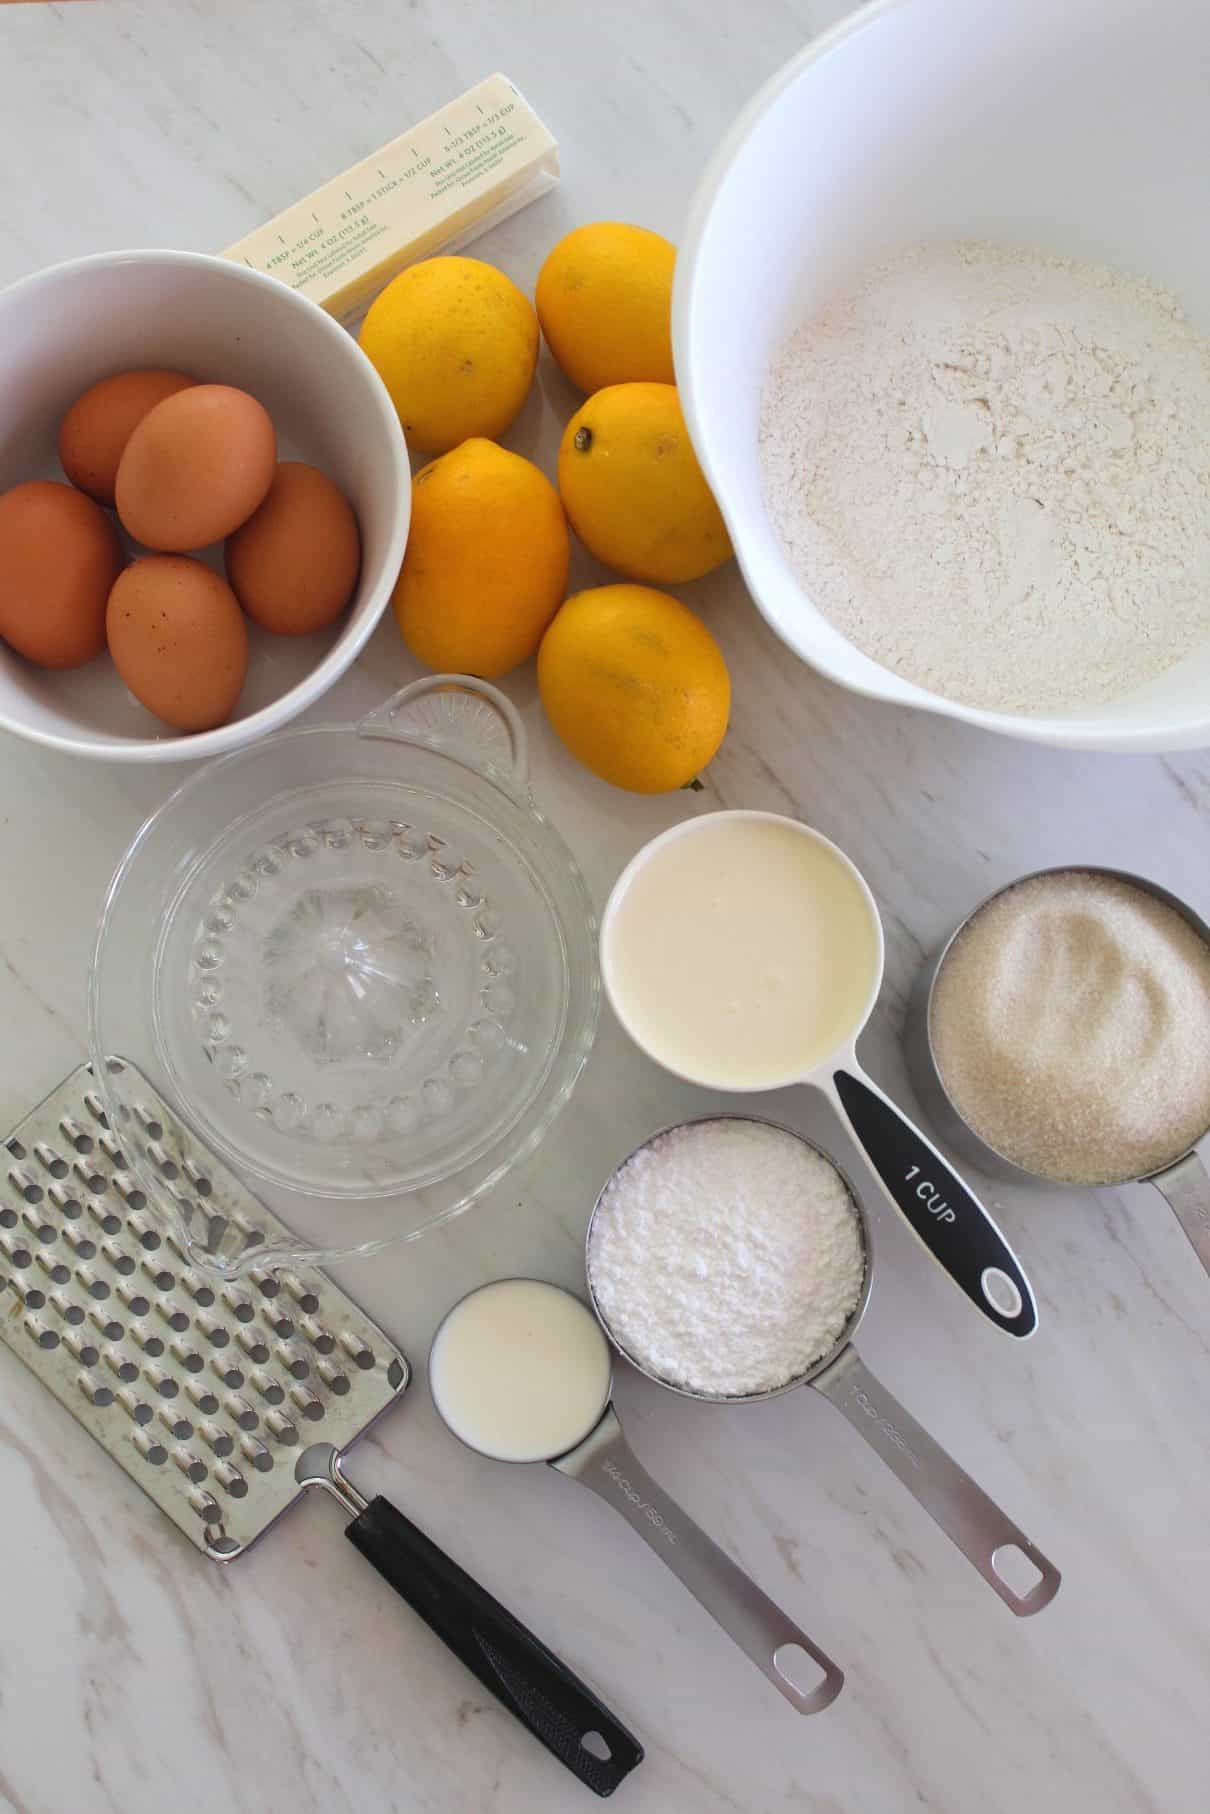 Ingredients in measuring cups and bowls for making Meyer Lemon Bundt cake - eggs, butter, flour, heavy cream, sugar, powder sugar, milk.